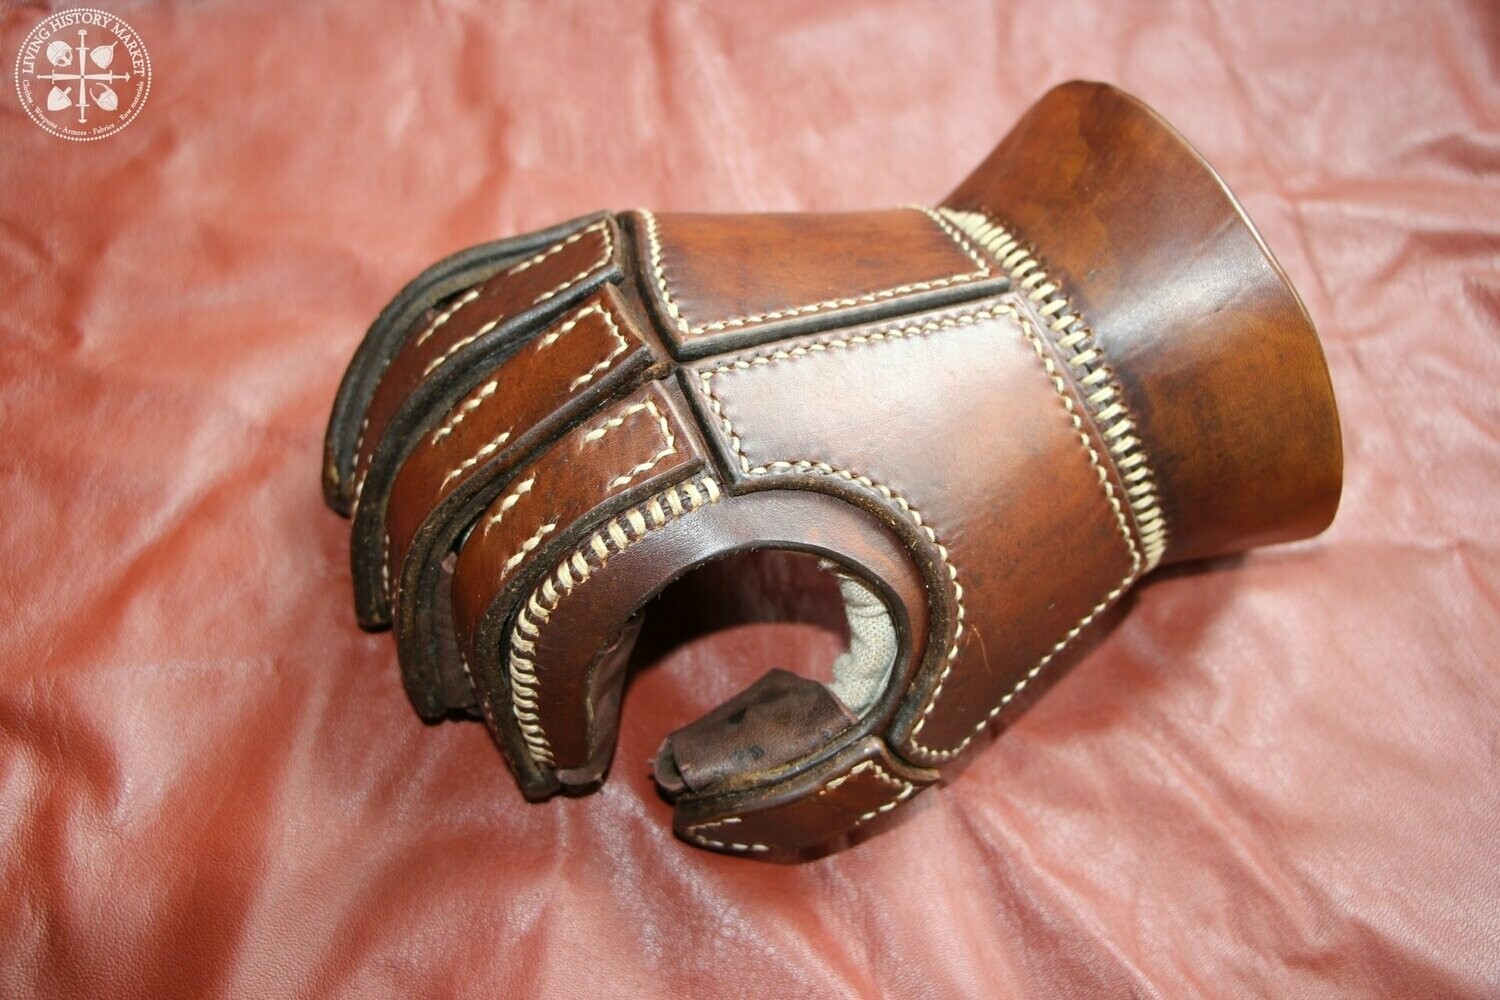 Leather combat glove - 5 fingers